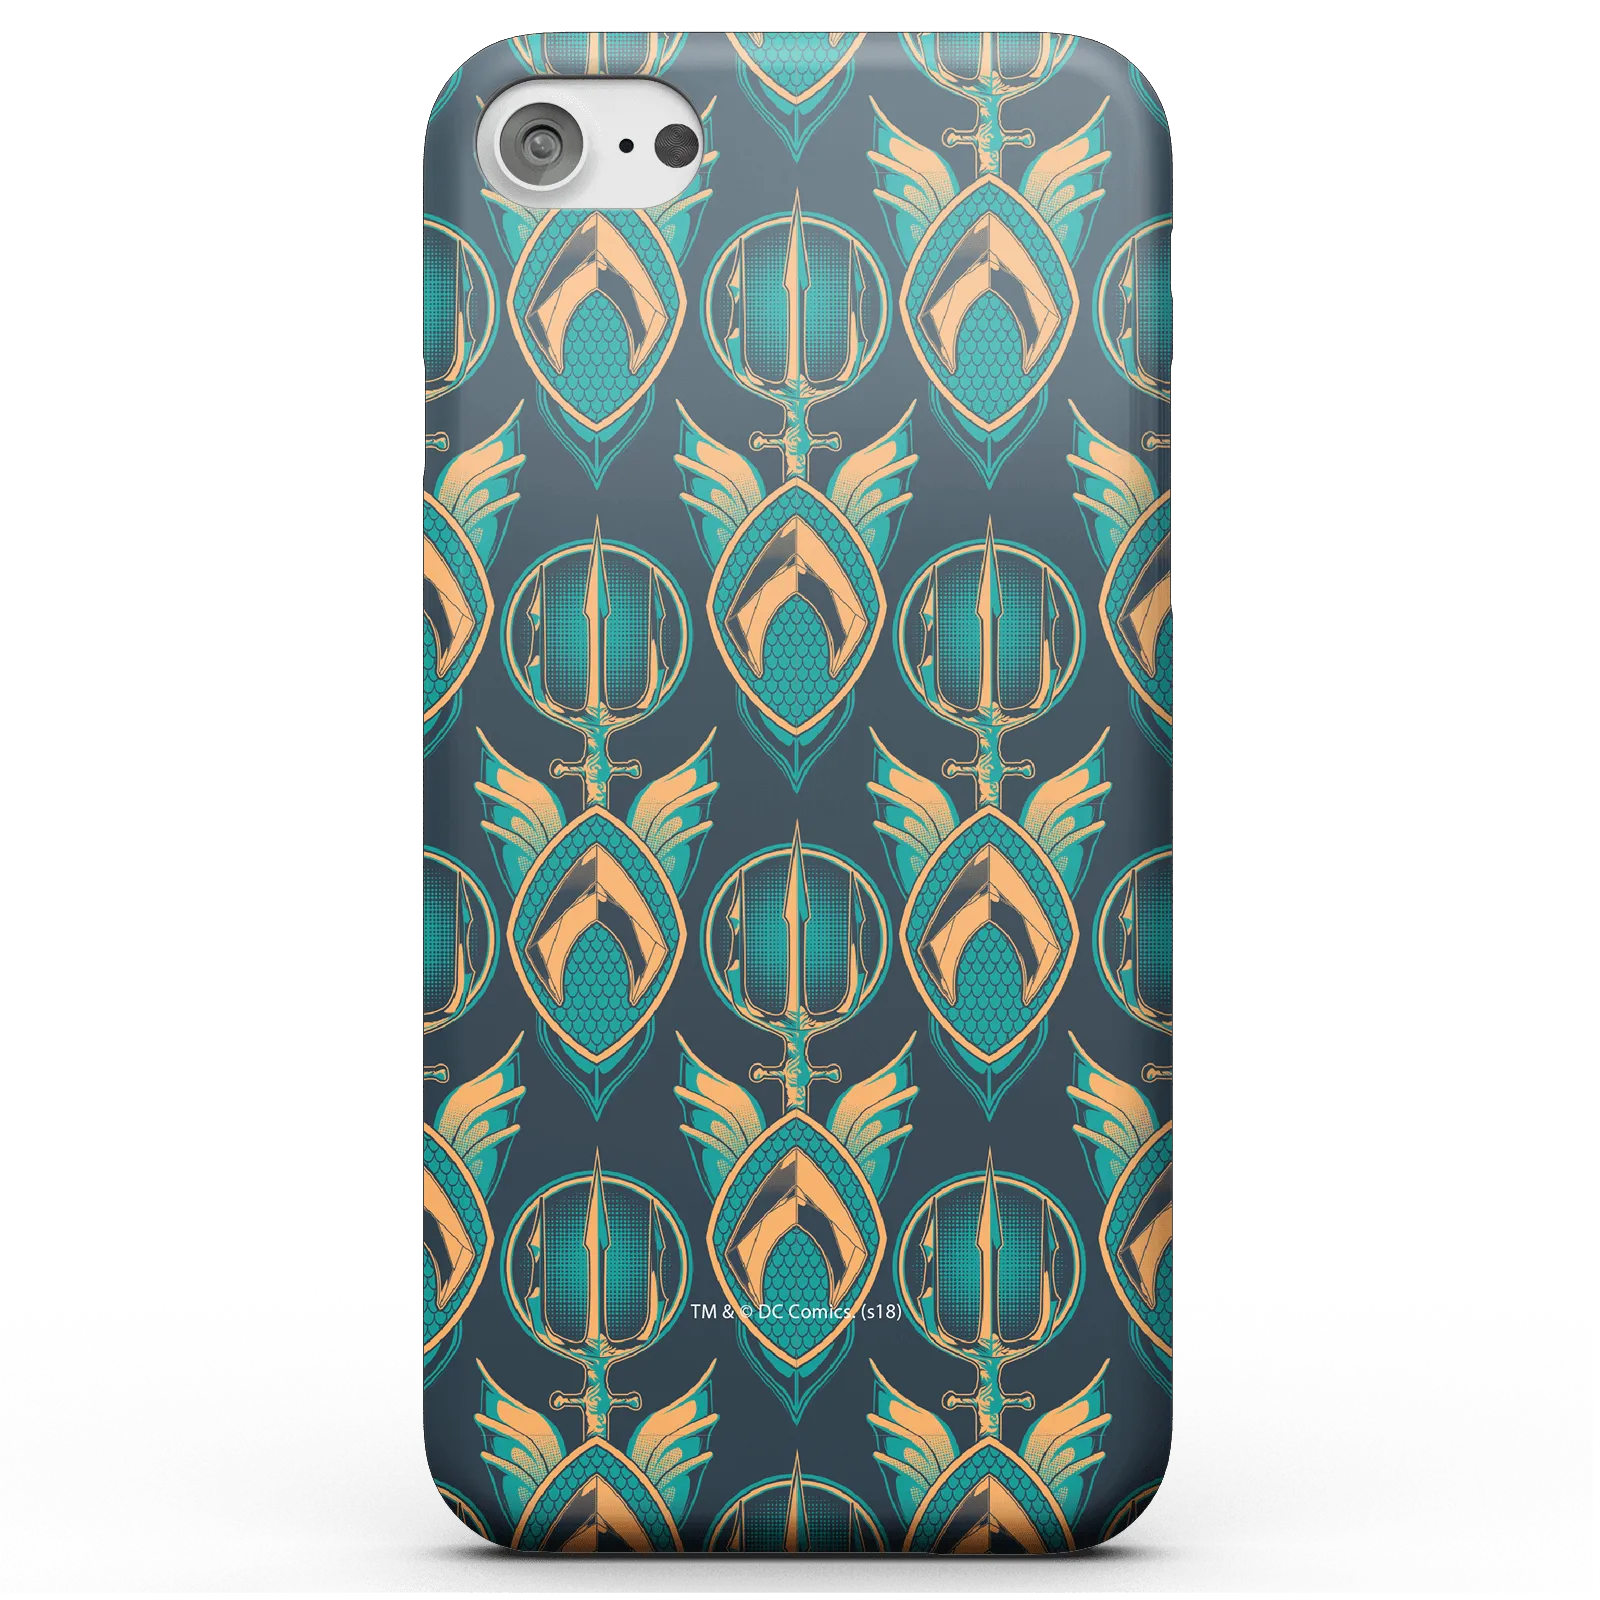 Cover telefono Aquaman per iPhone e Android - Samsung Note 8 - Custodia rigida - Lucida